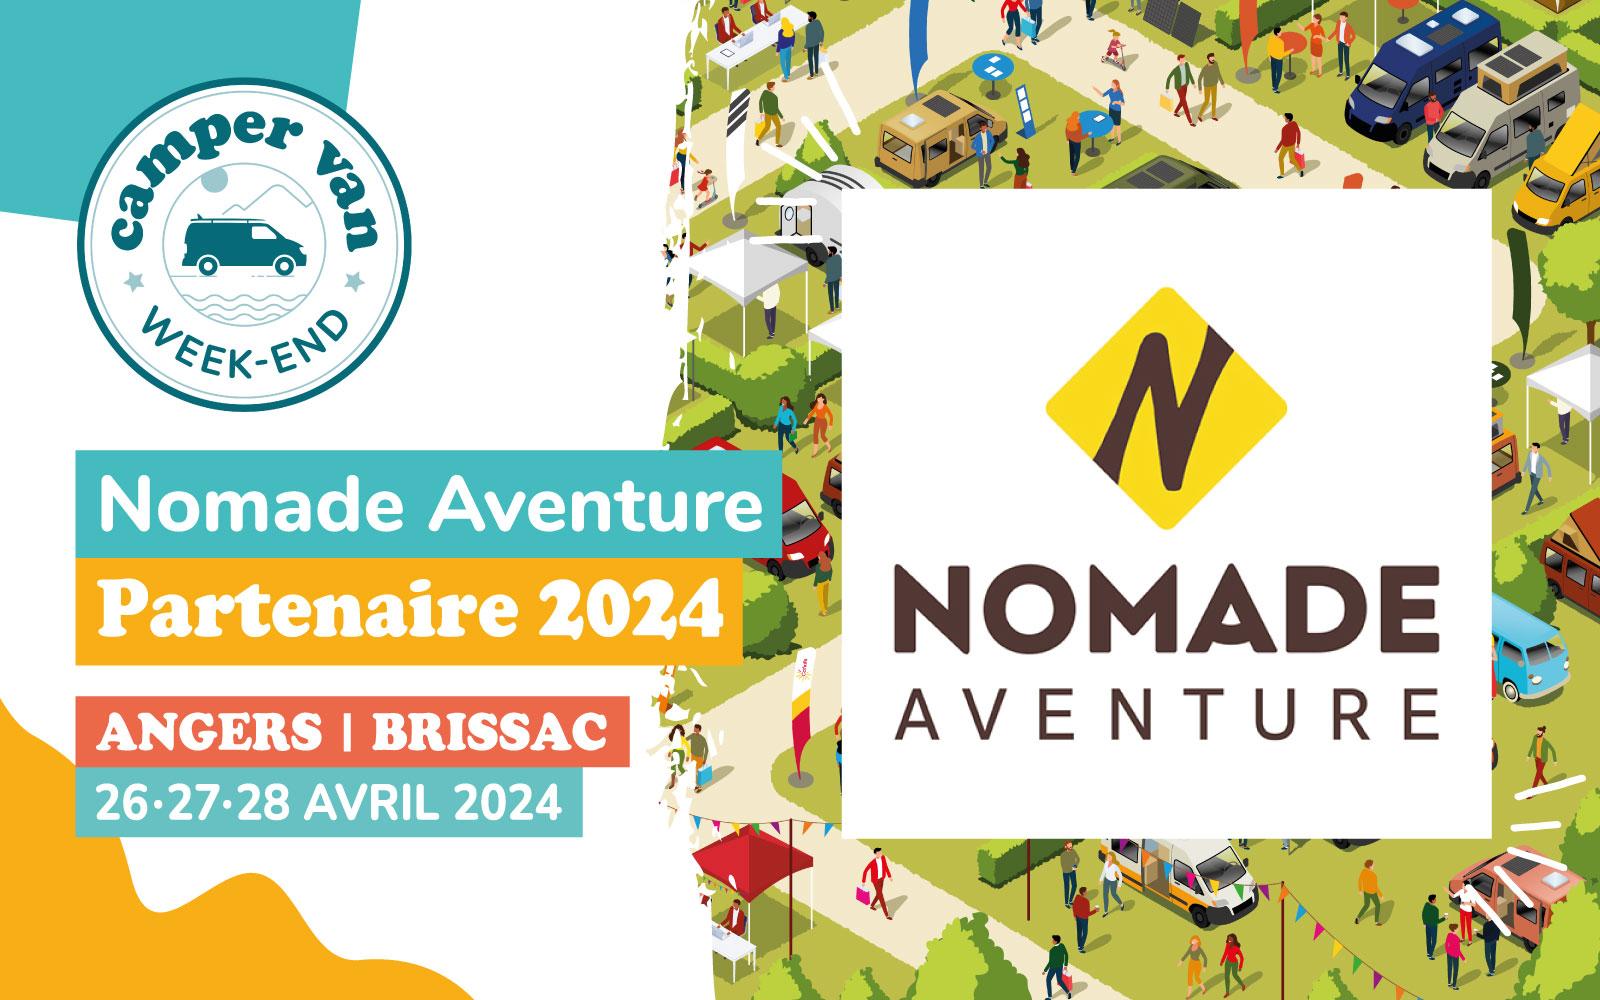 Zoom sur Nomade Aventure, partenaire du Camper Van Week-End